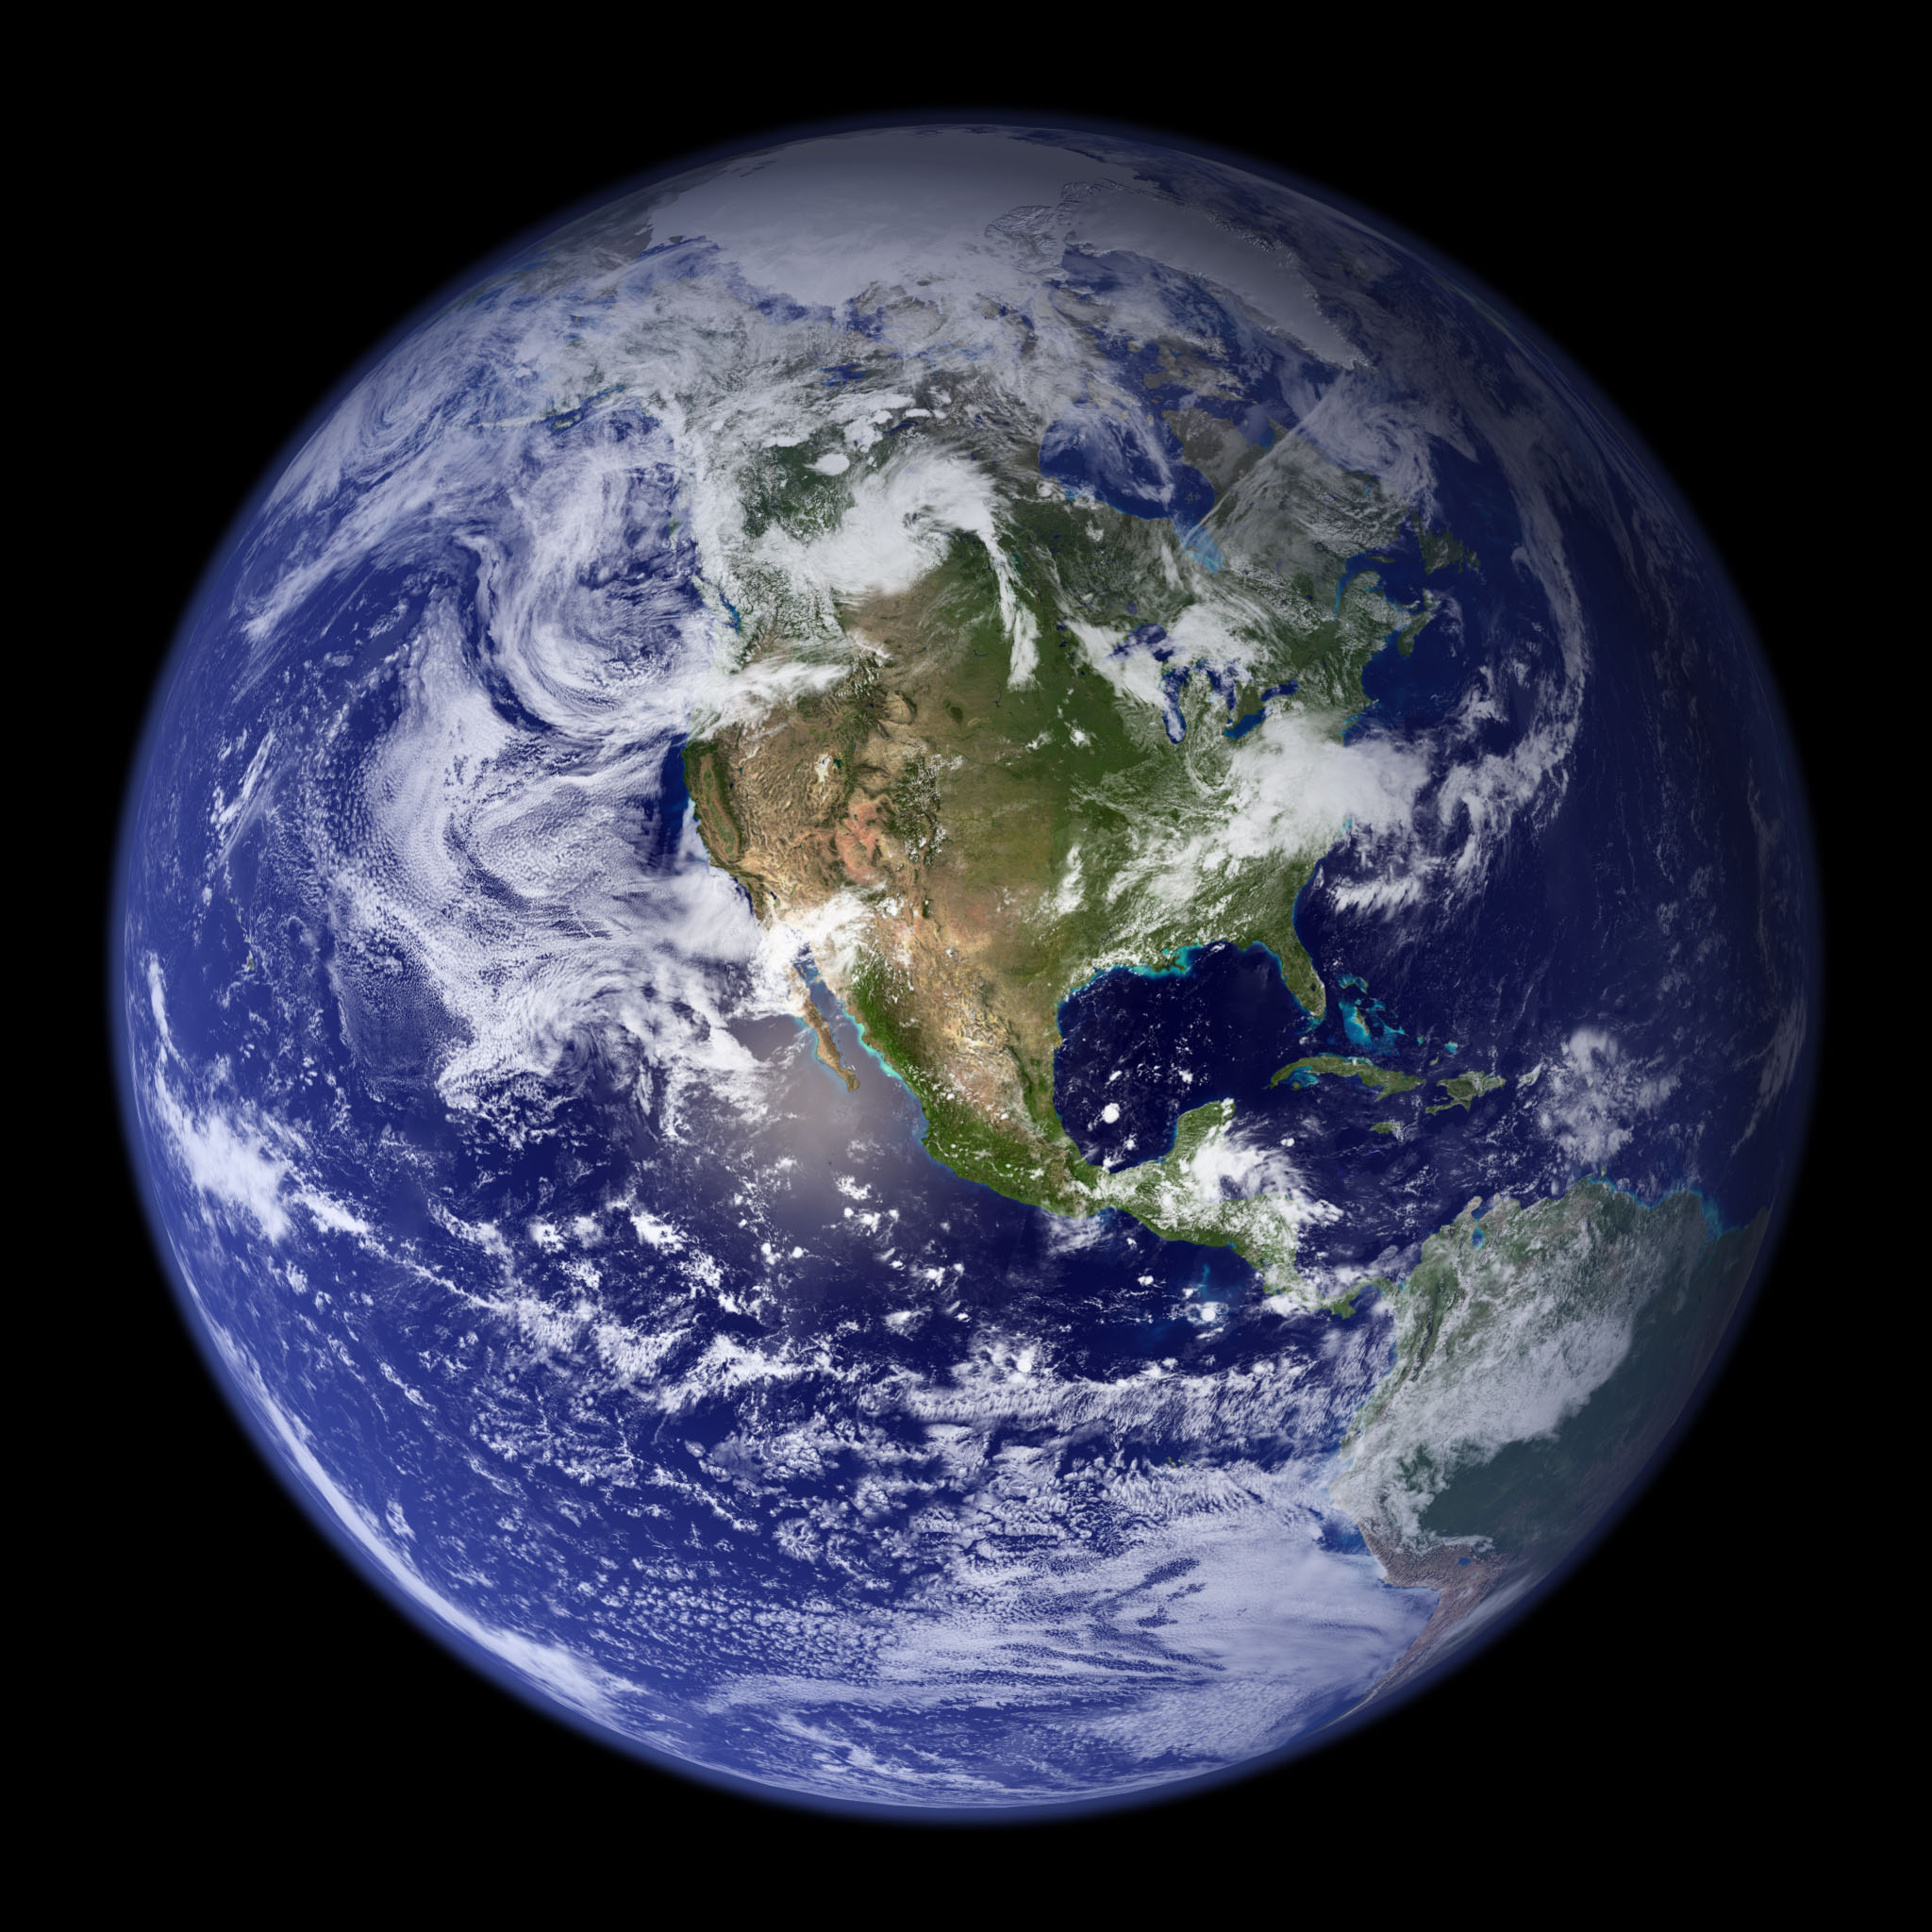 Earth's western hemisphere as seen by MODIS